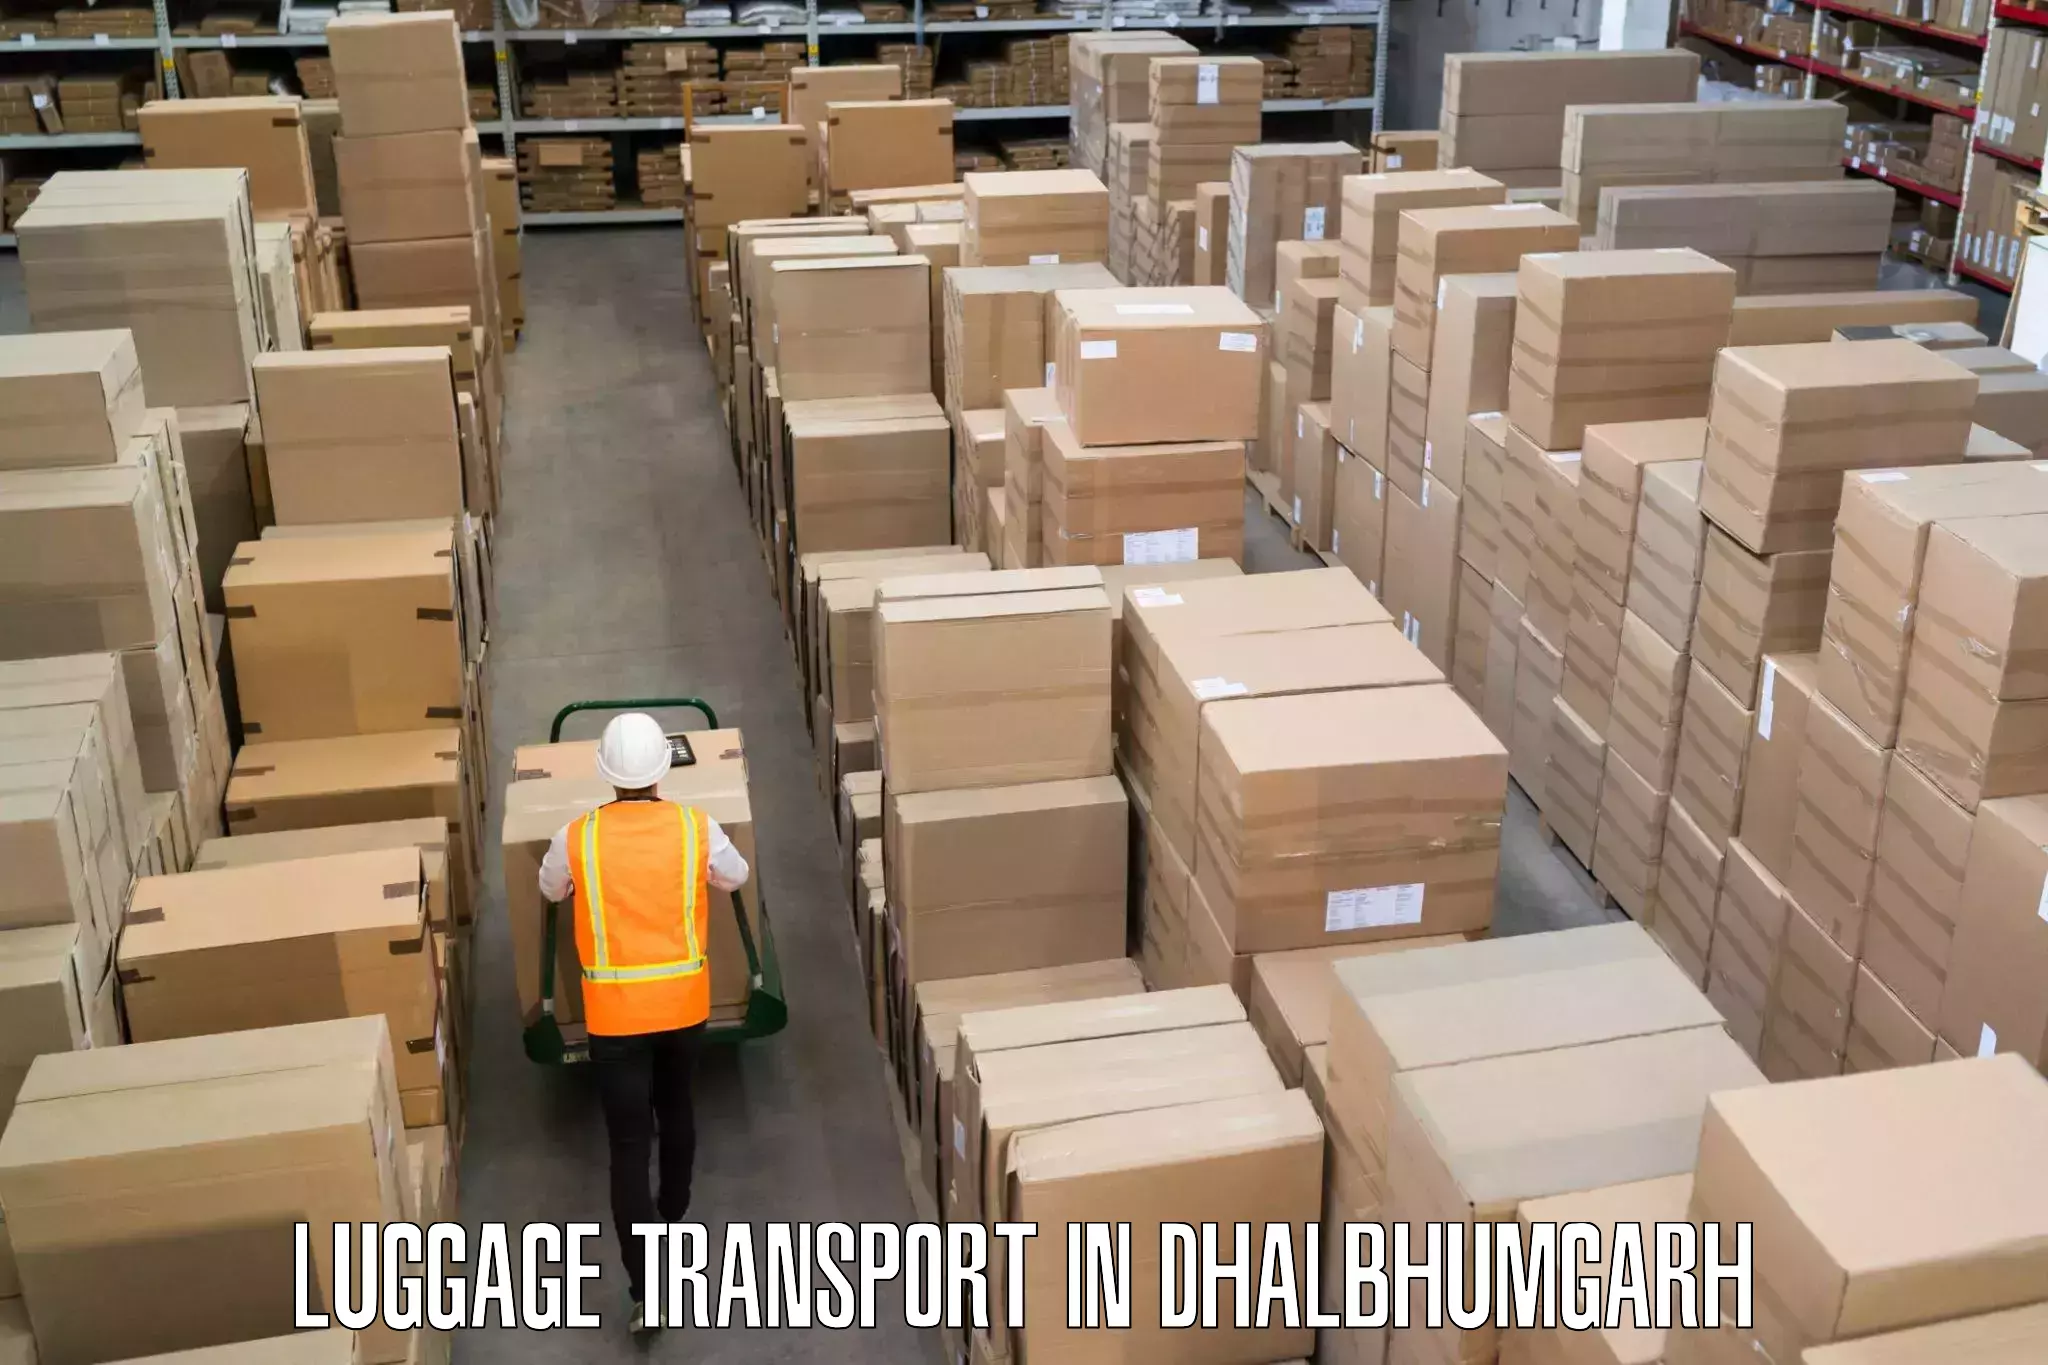 Luggage shipment processing in Dhalbhumgarh